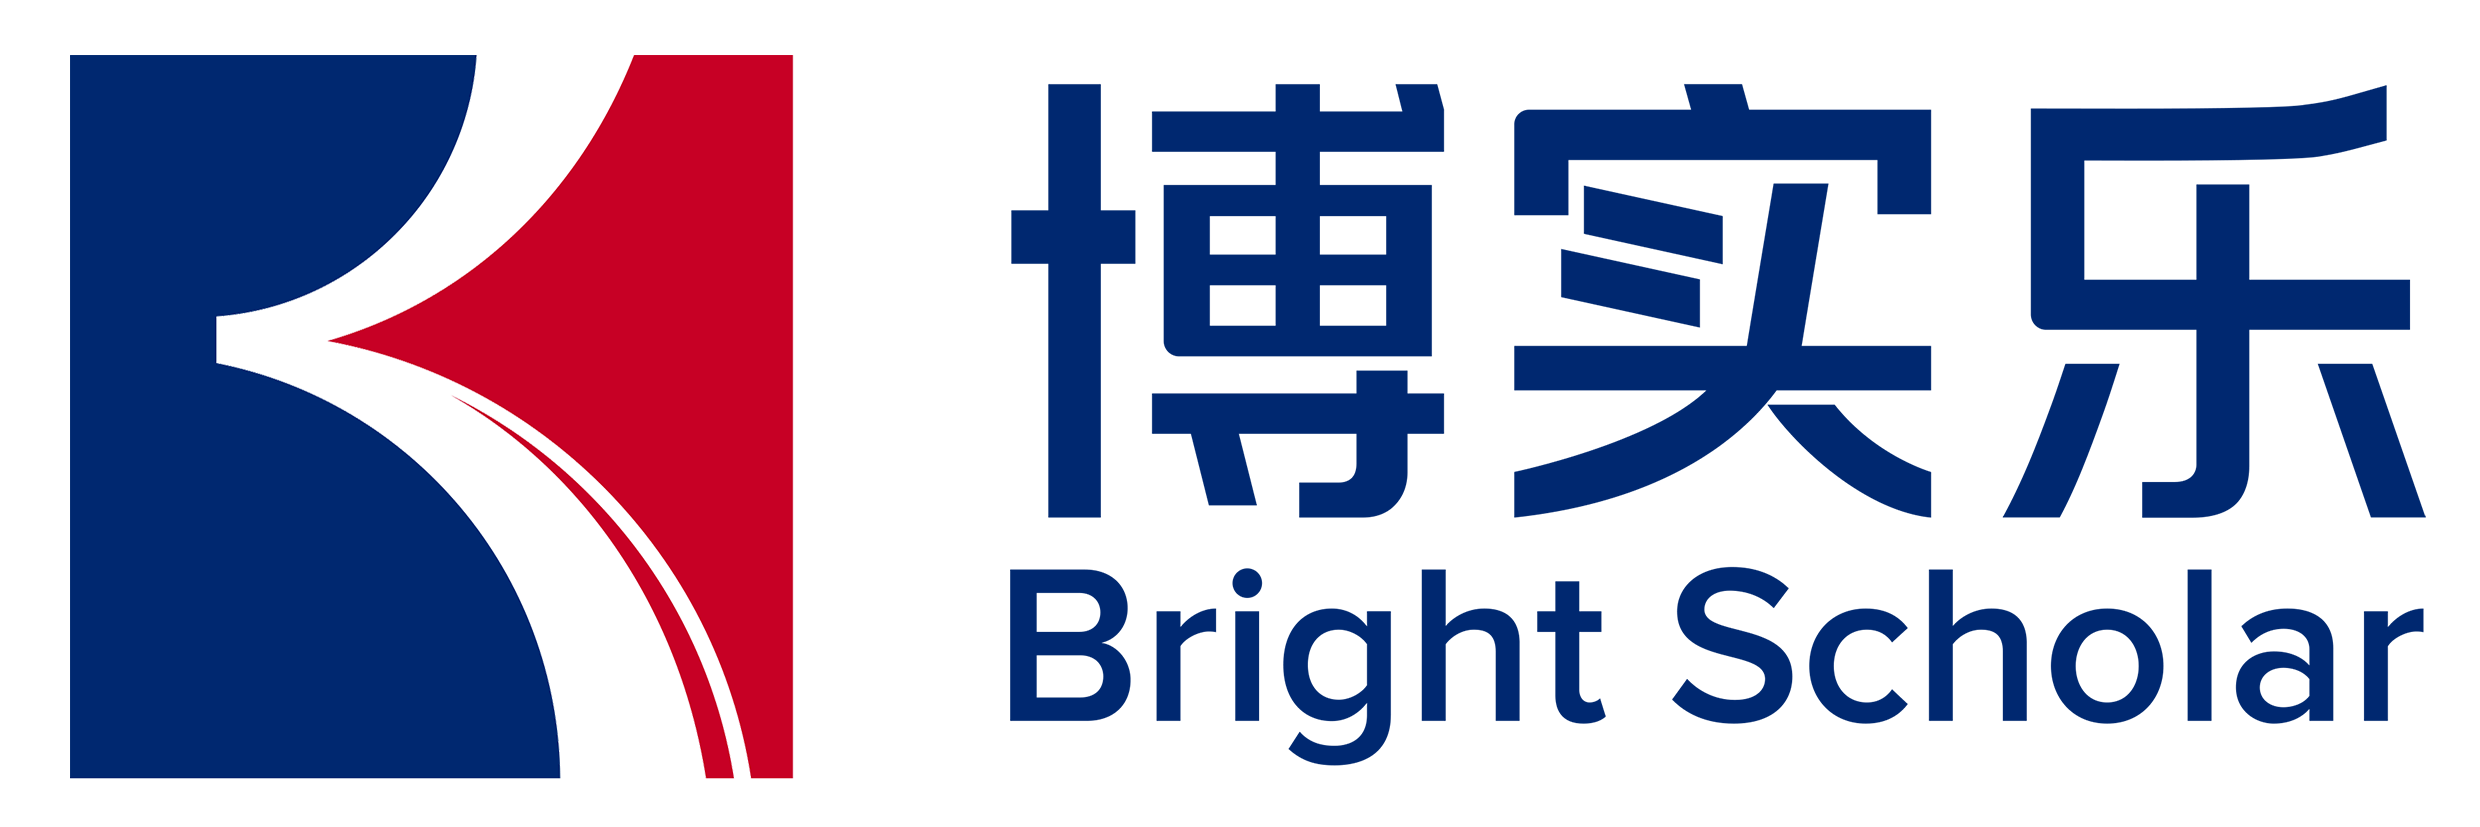 Bright Scholar Group